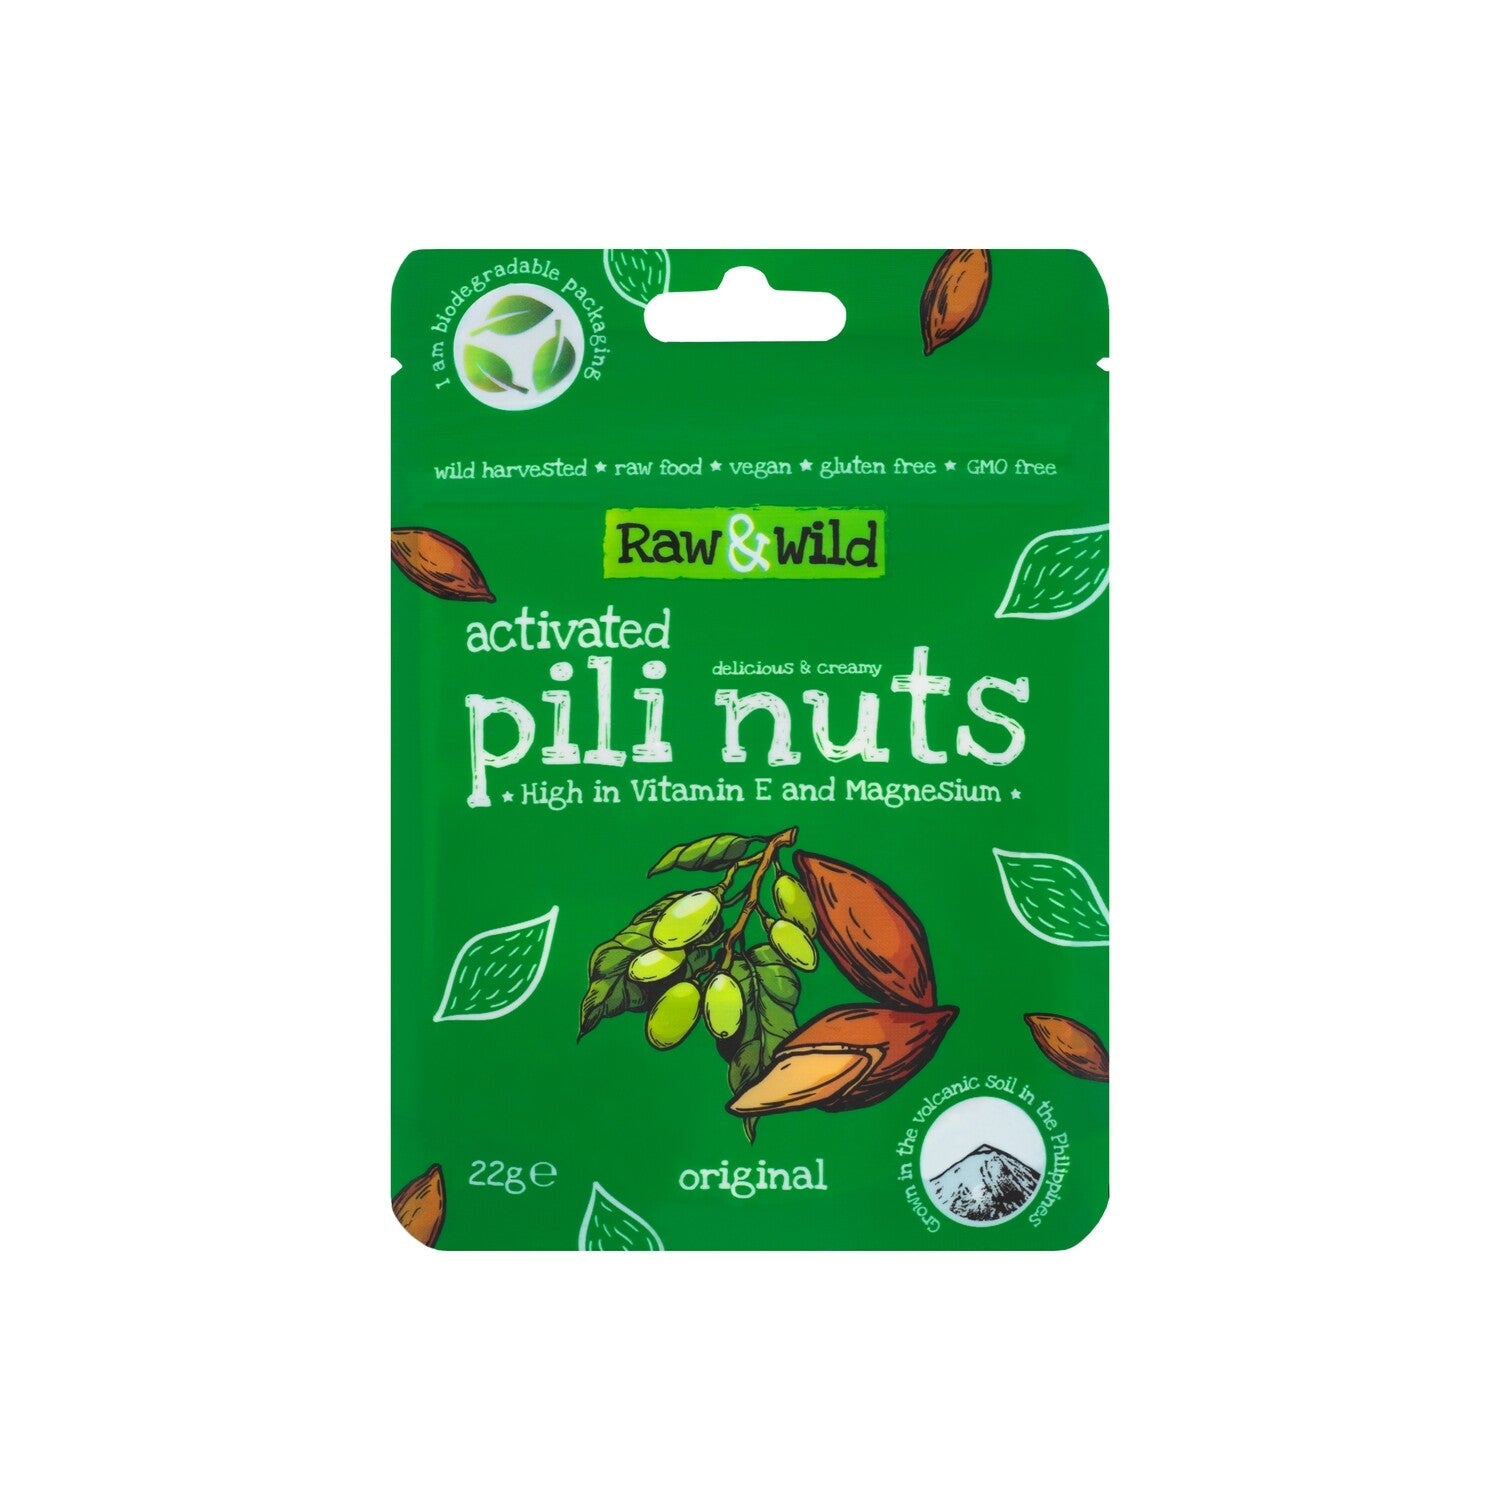 Original Pili nuts snack pack